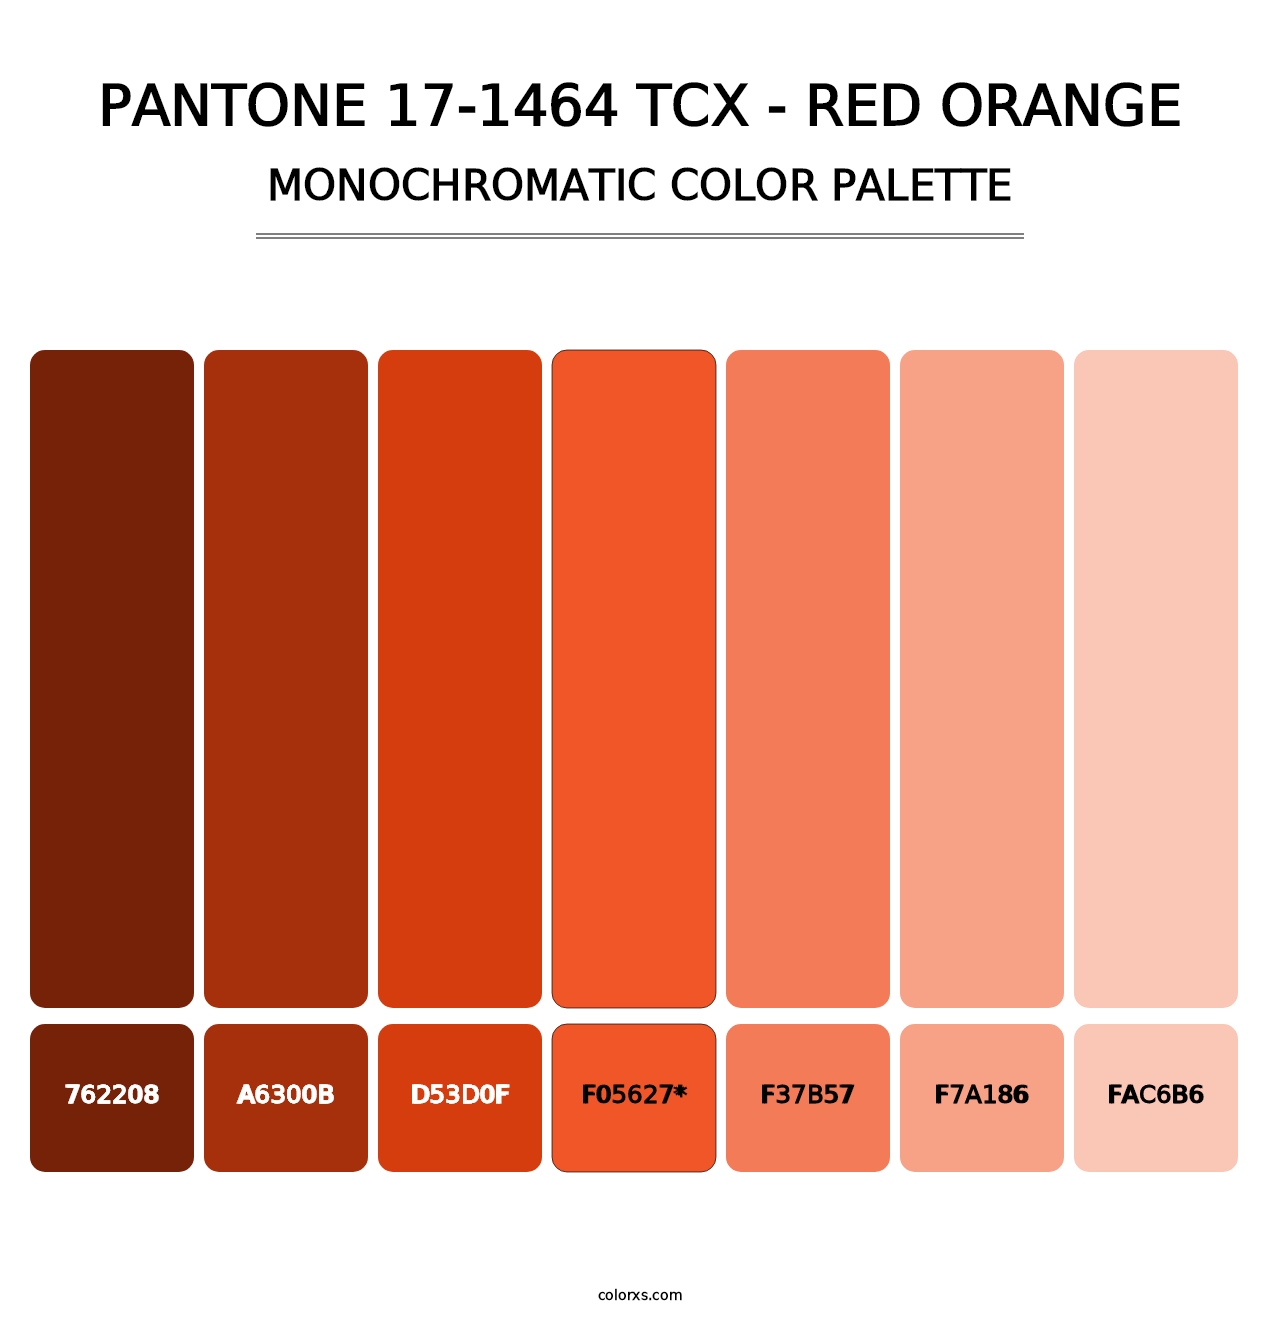 PANTONE 17-1464 TCX - Red Orange - Monochromatic Color Palette